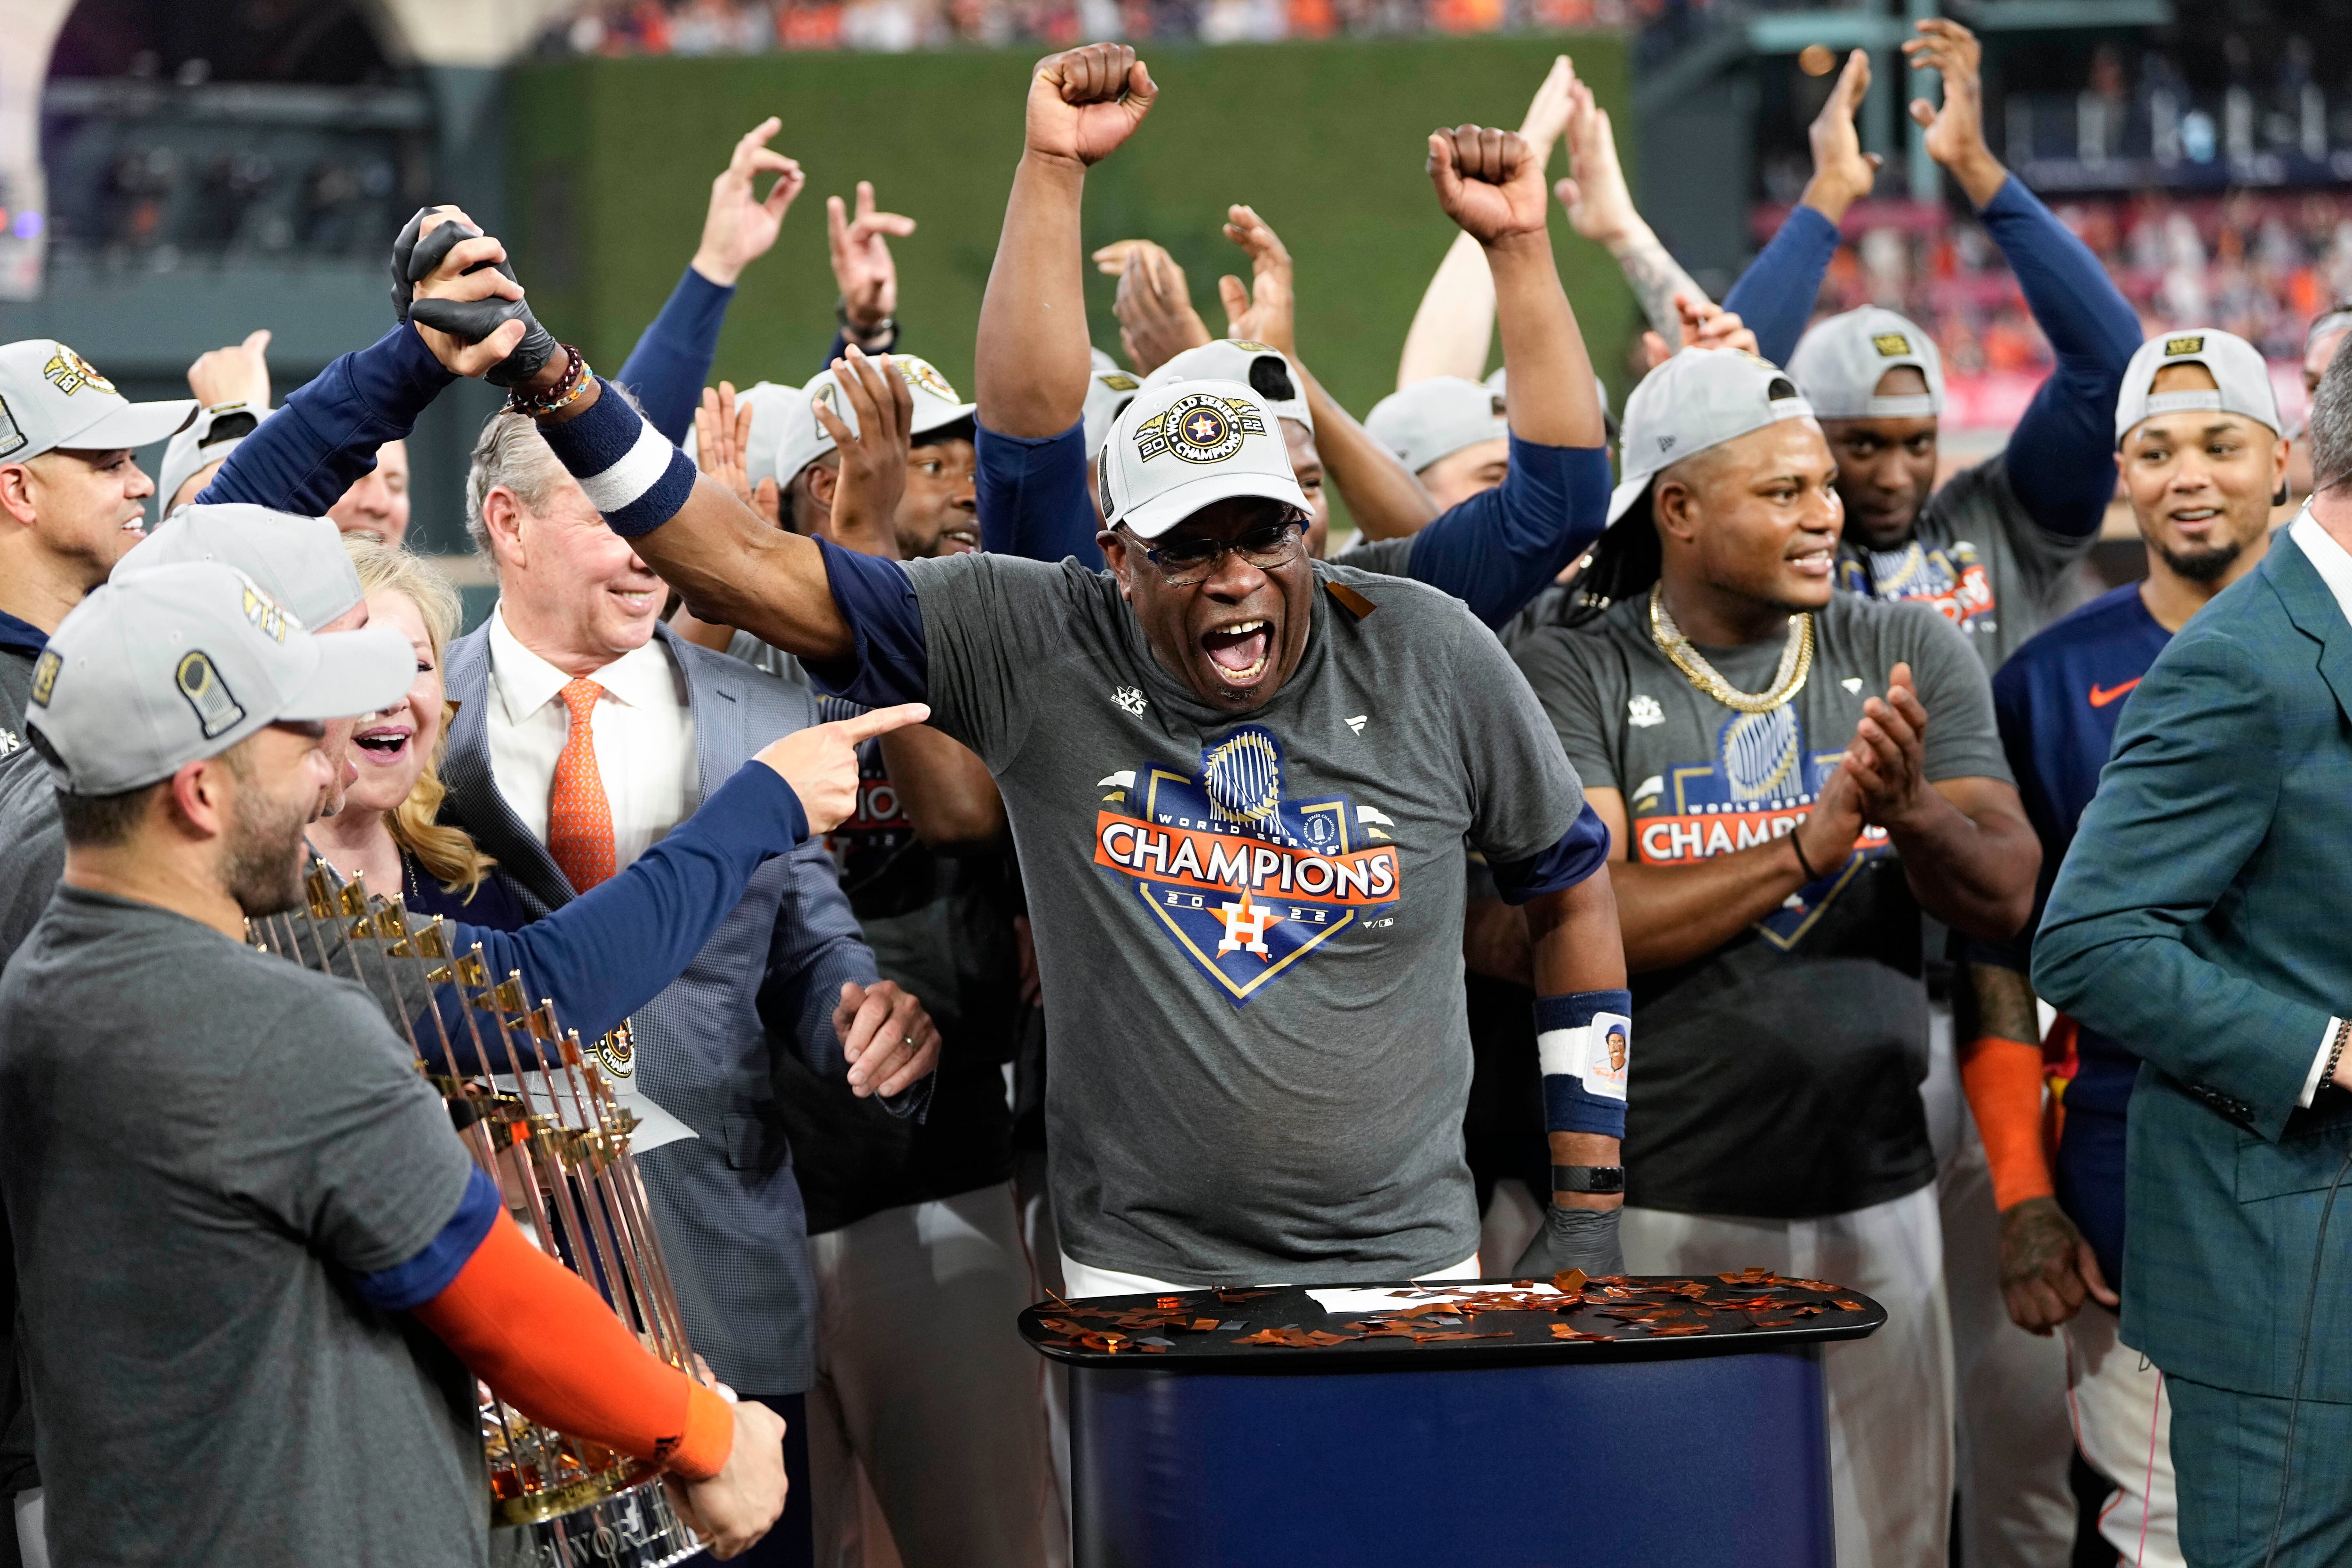 Houston Astros Baseball World Series 2022 American League Make America Mad  Again Shirt in 2023